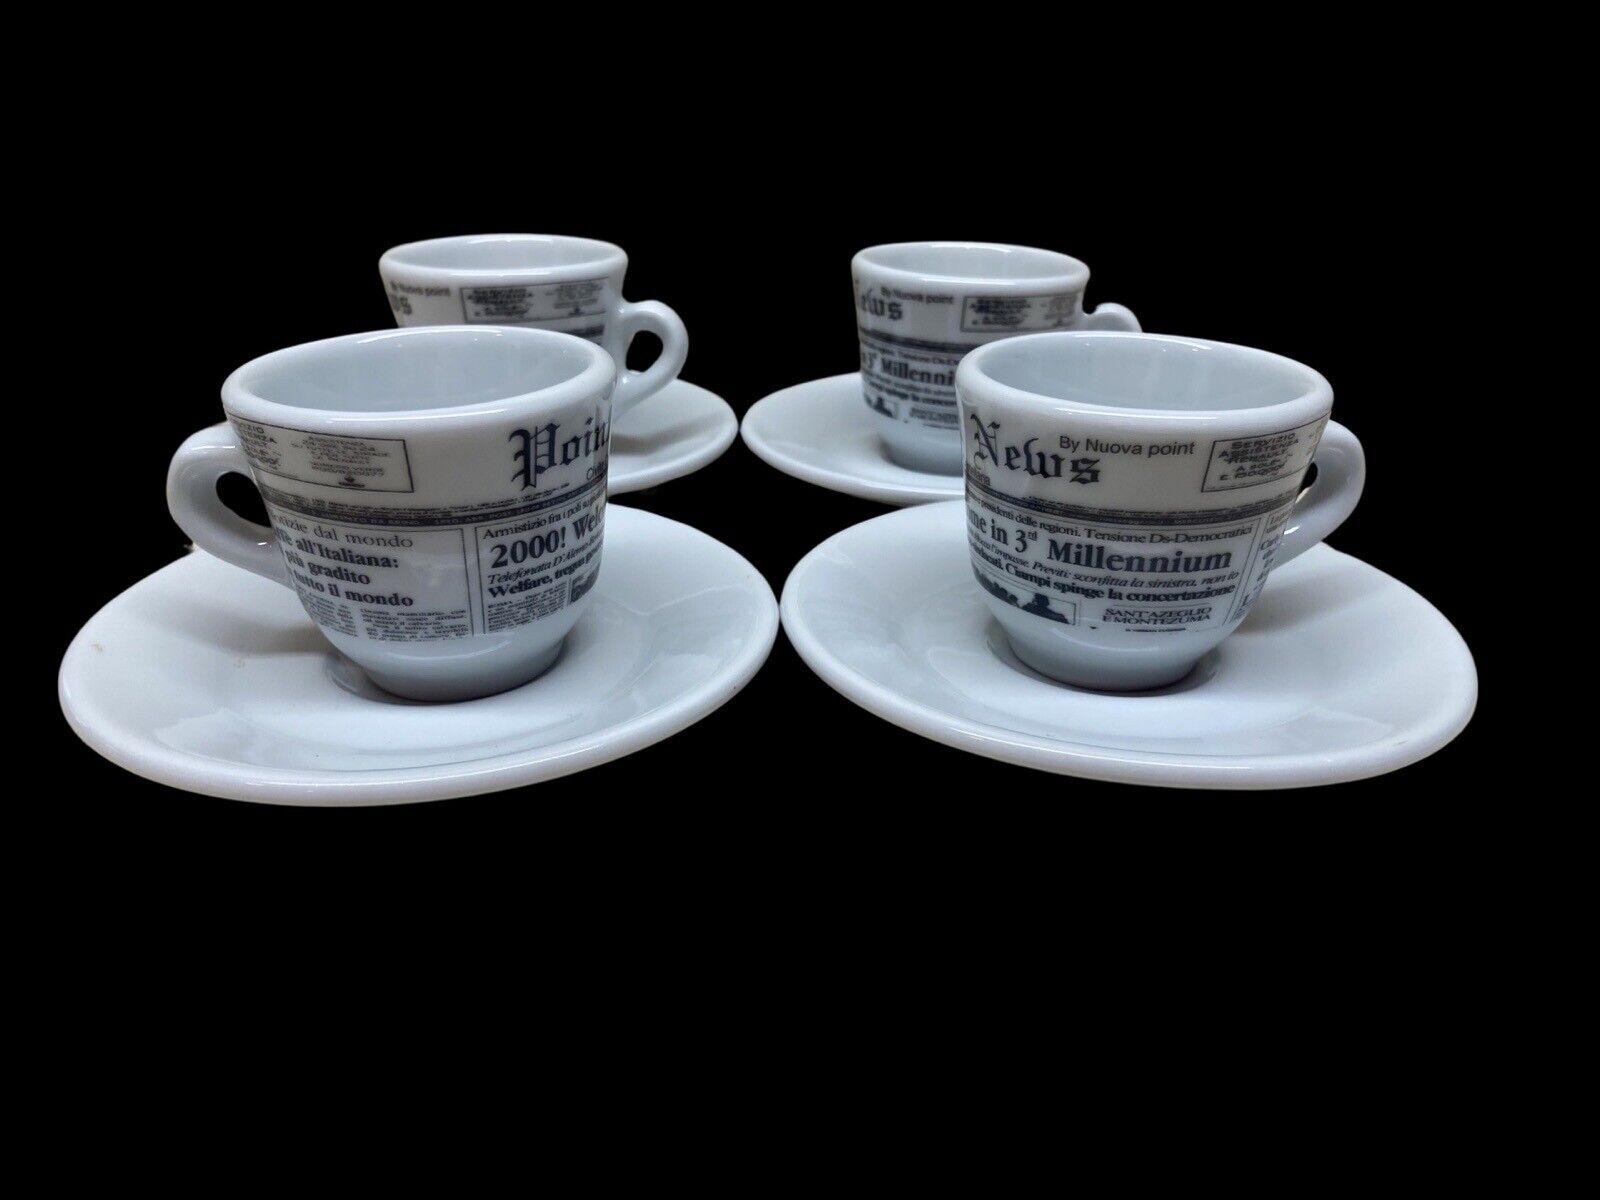 4 Rare Nuova Point News Italy Restaurant Ware Espresso Demitasse Cups & Saucers